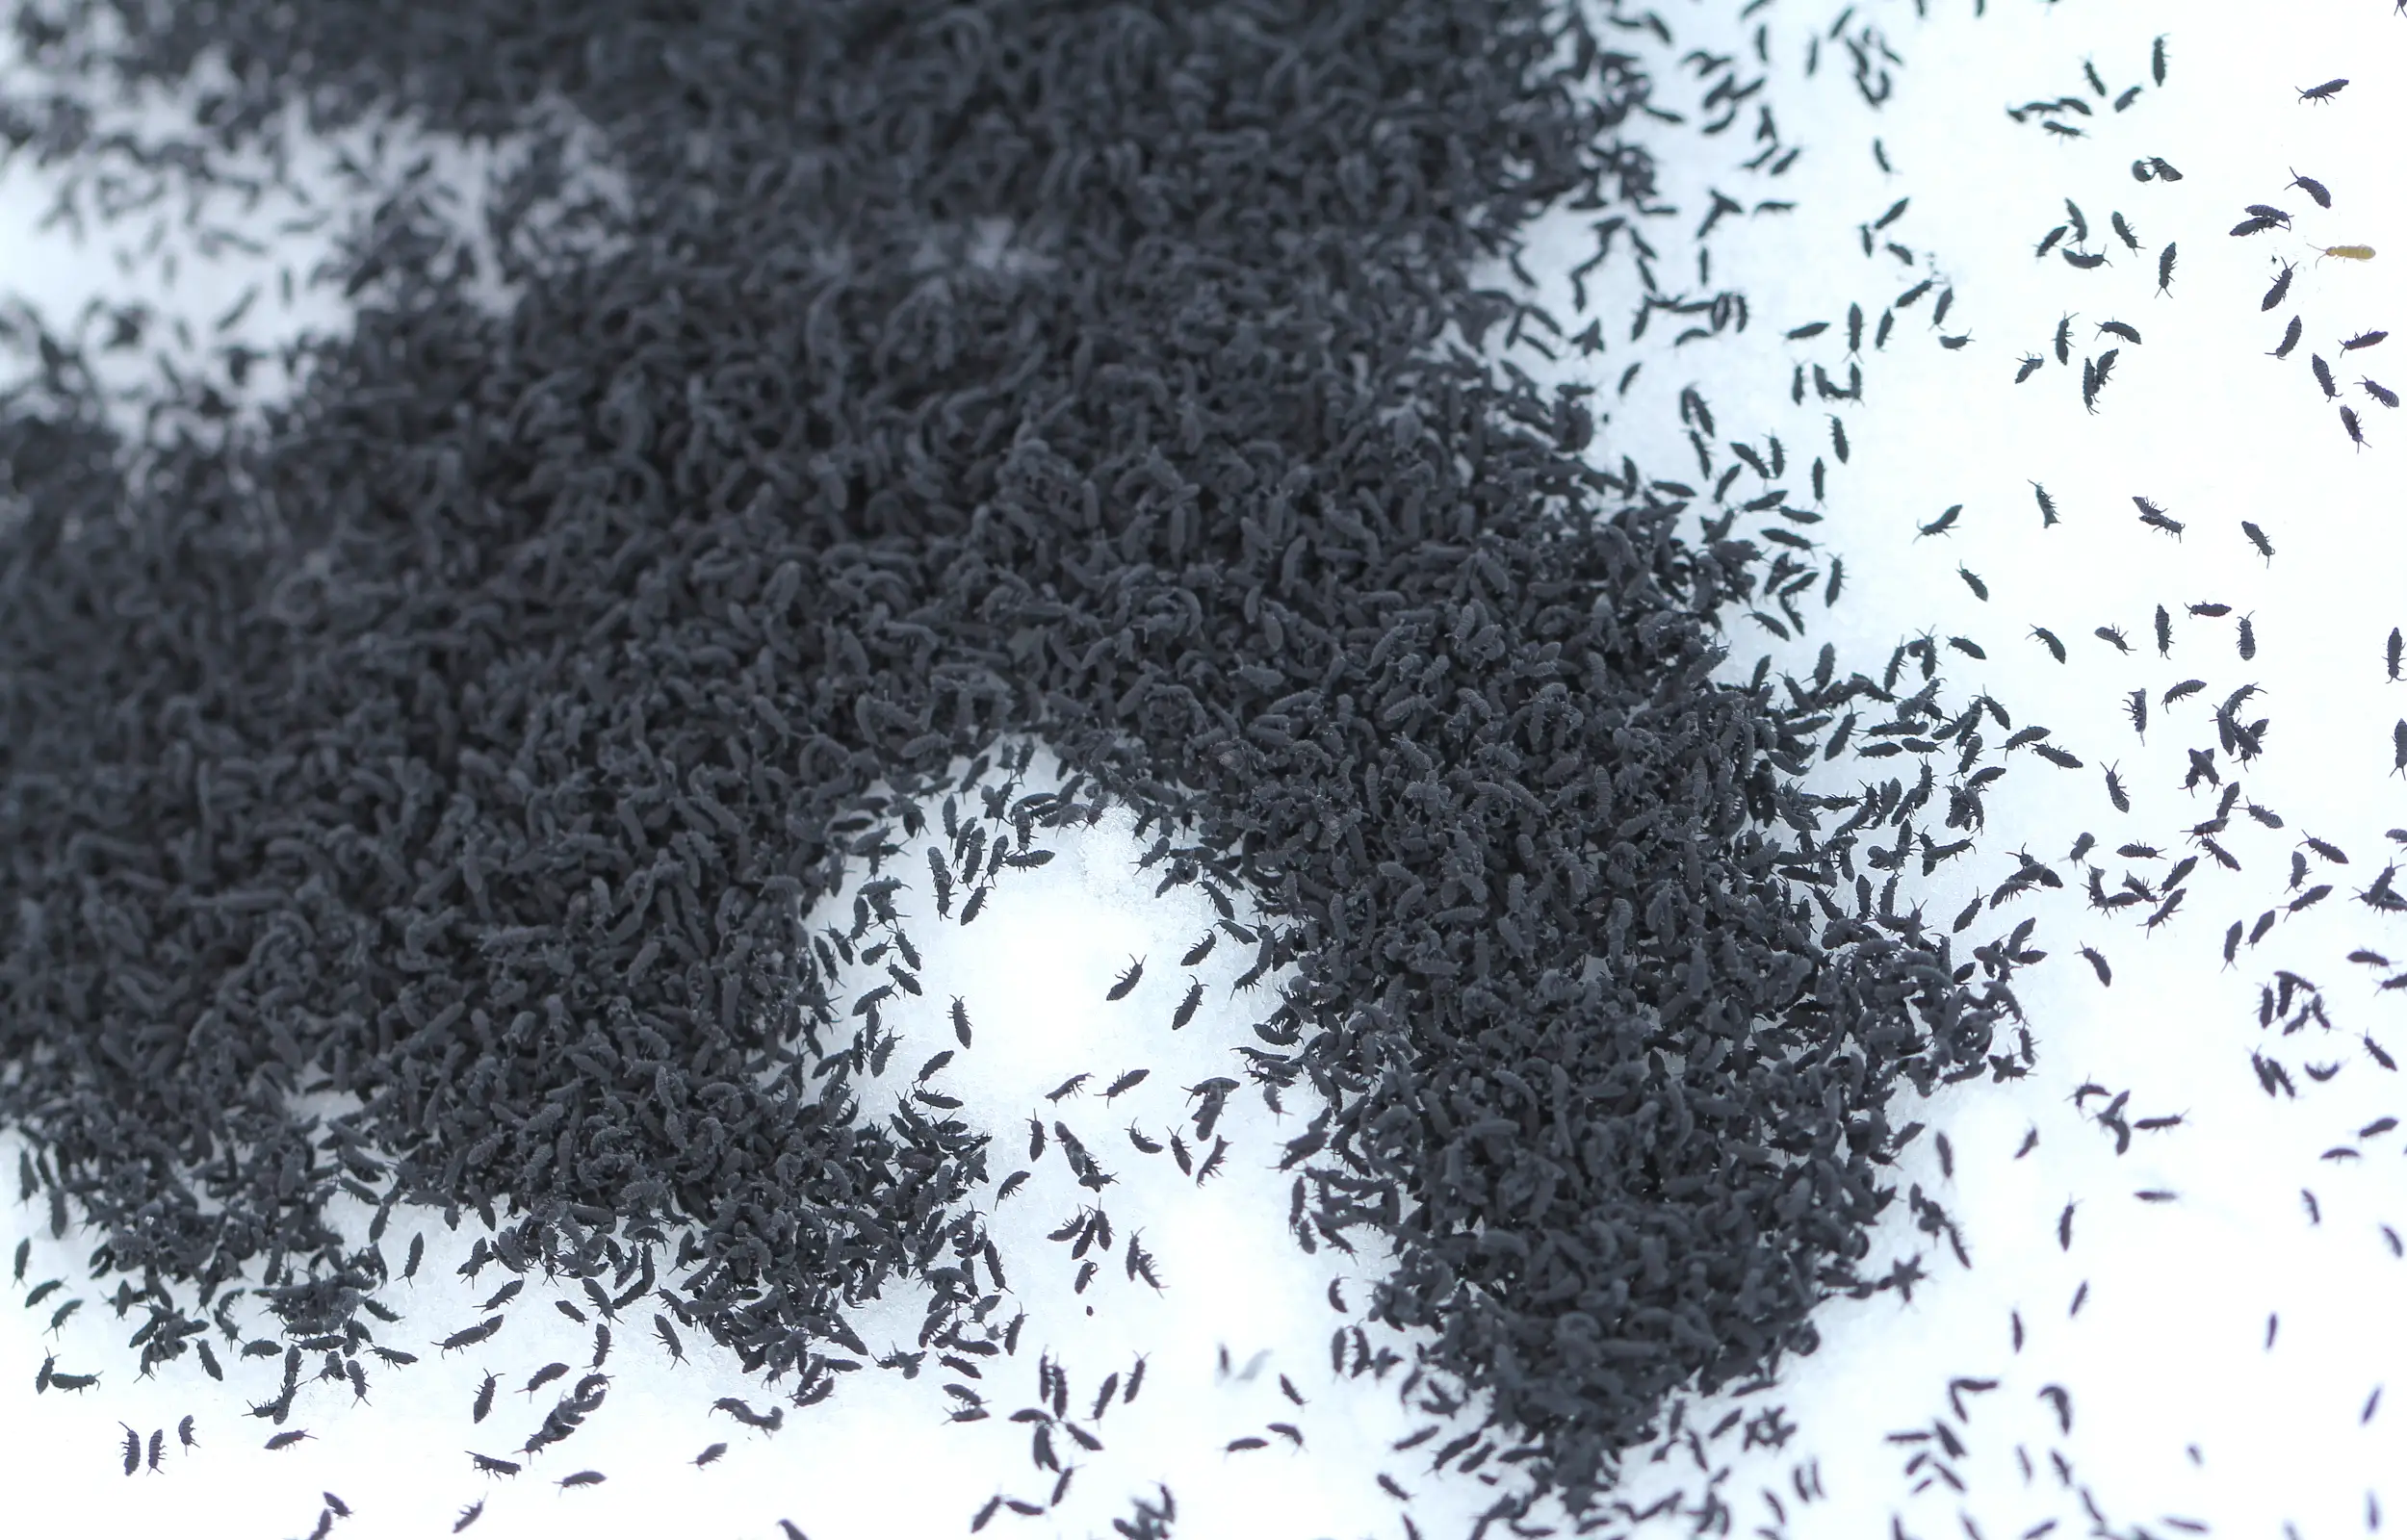 Swarm of snow fleas